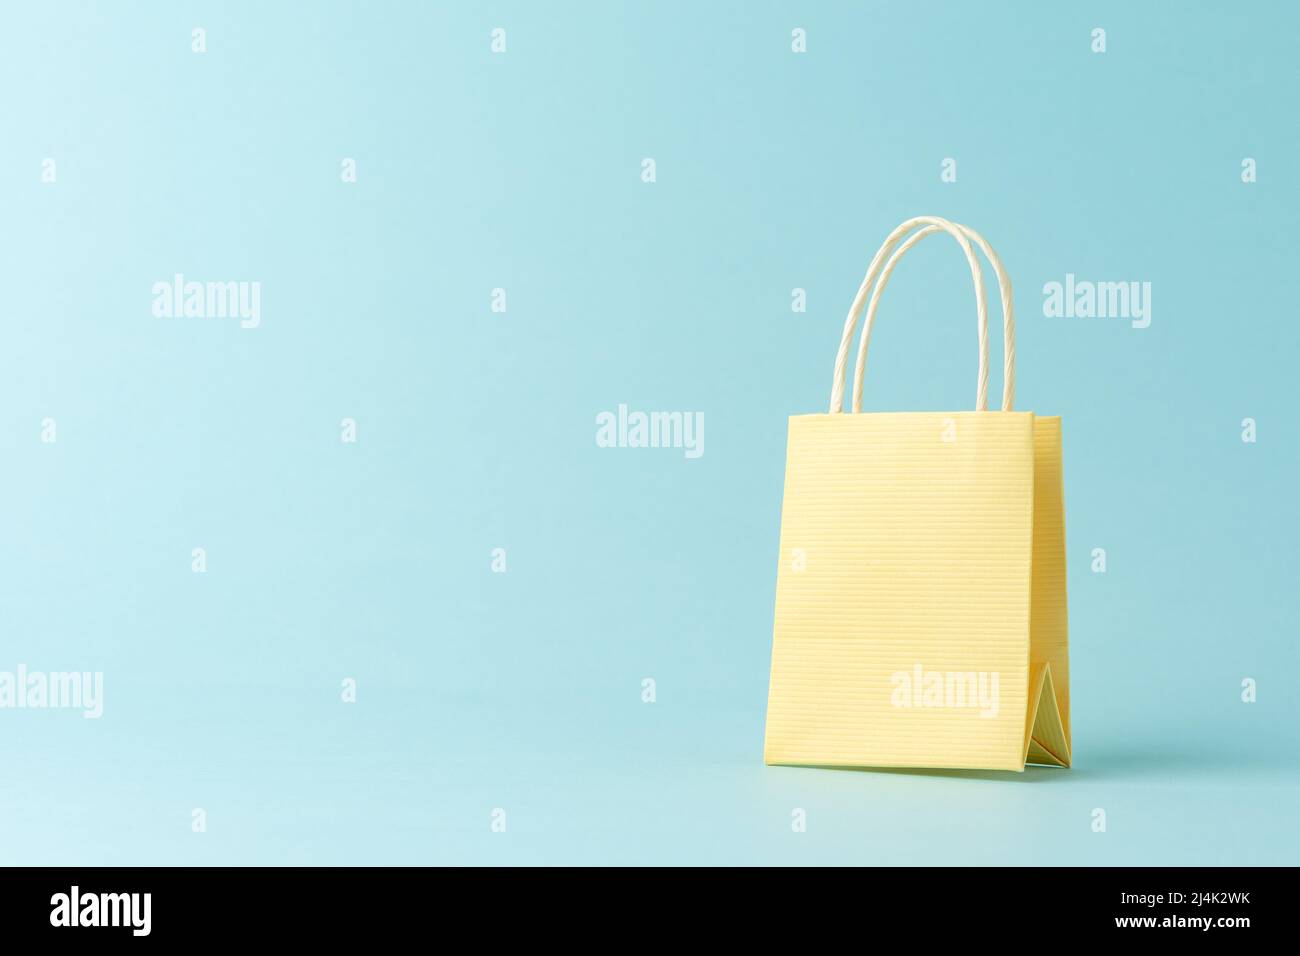 Yellow shopping bag on blue background. Creative minimal shopping concept. Stock Photo